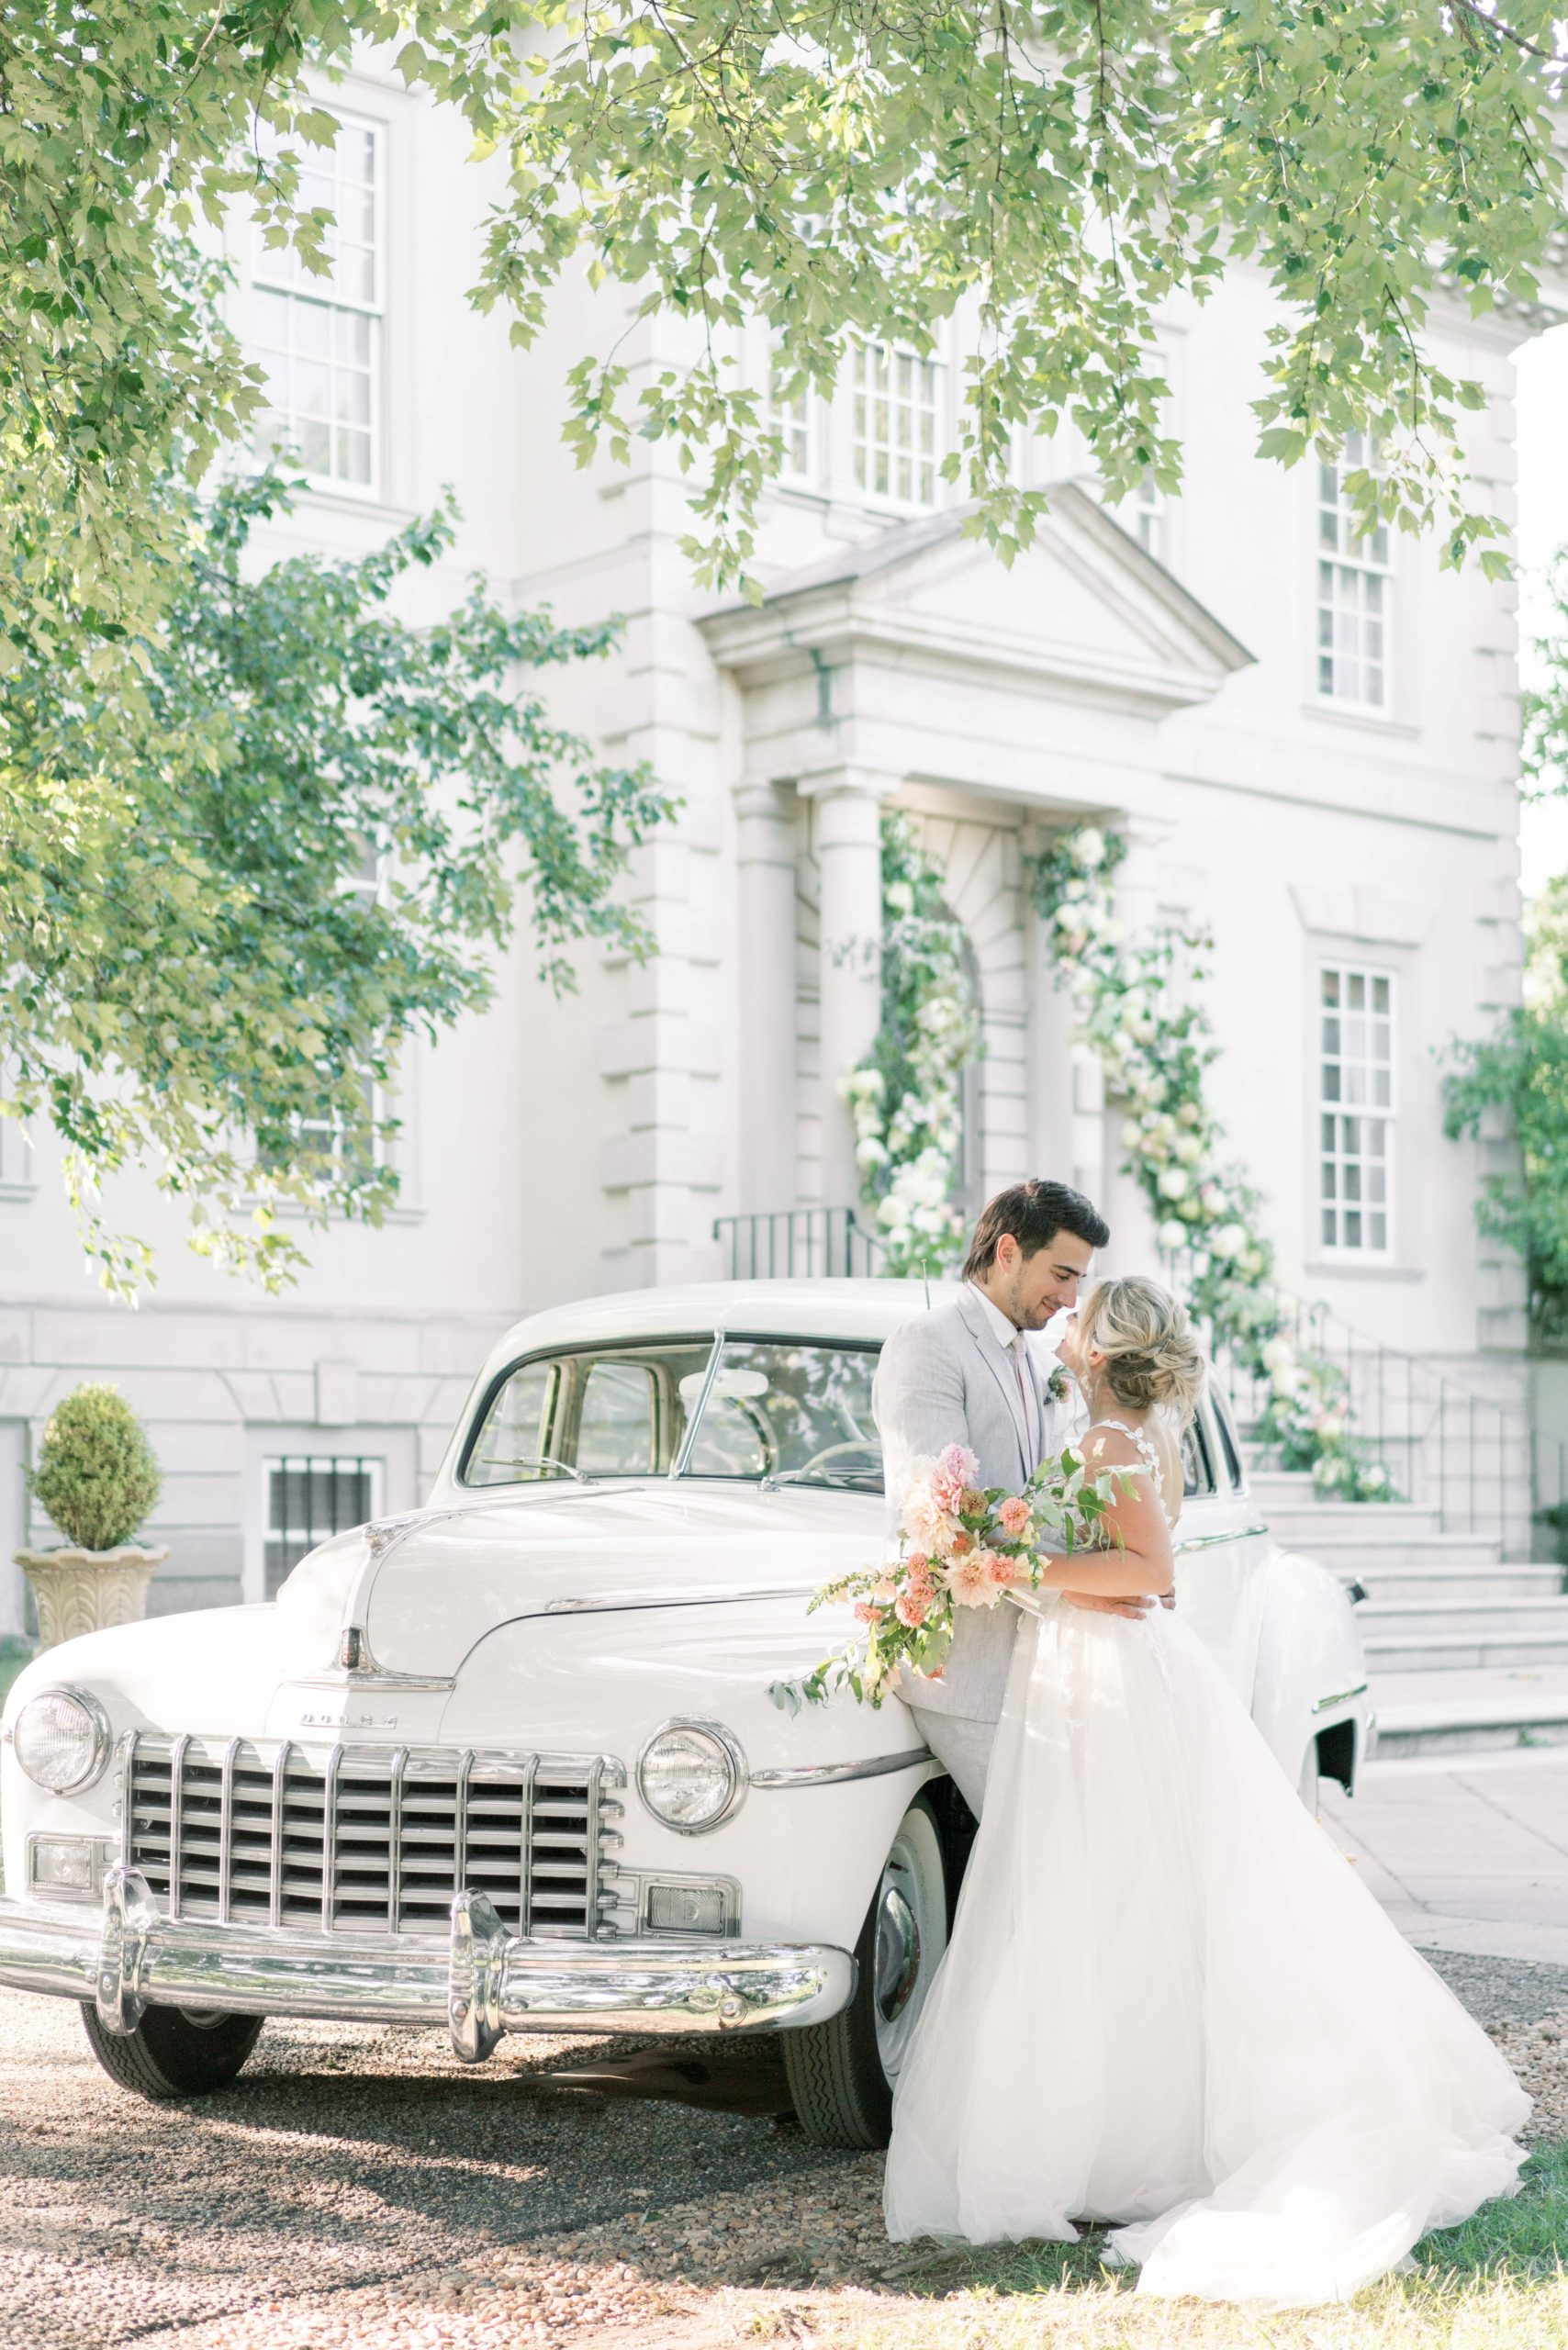 Stunning and romantic wedding portraits at Great Marsh Estate in Bealeton, VA.